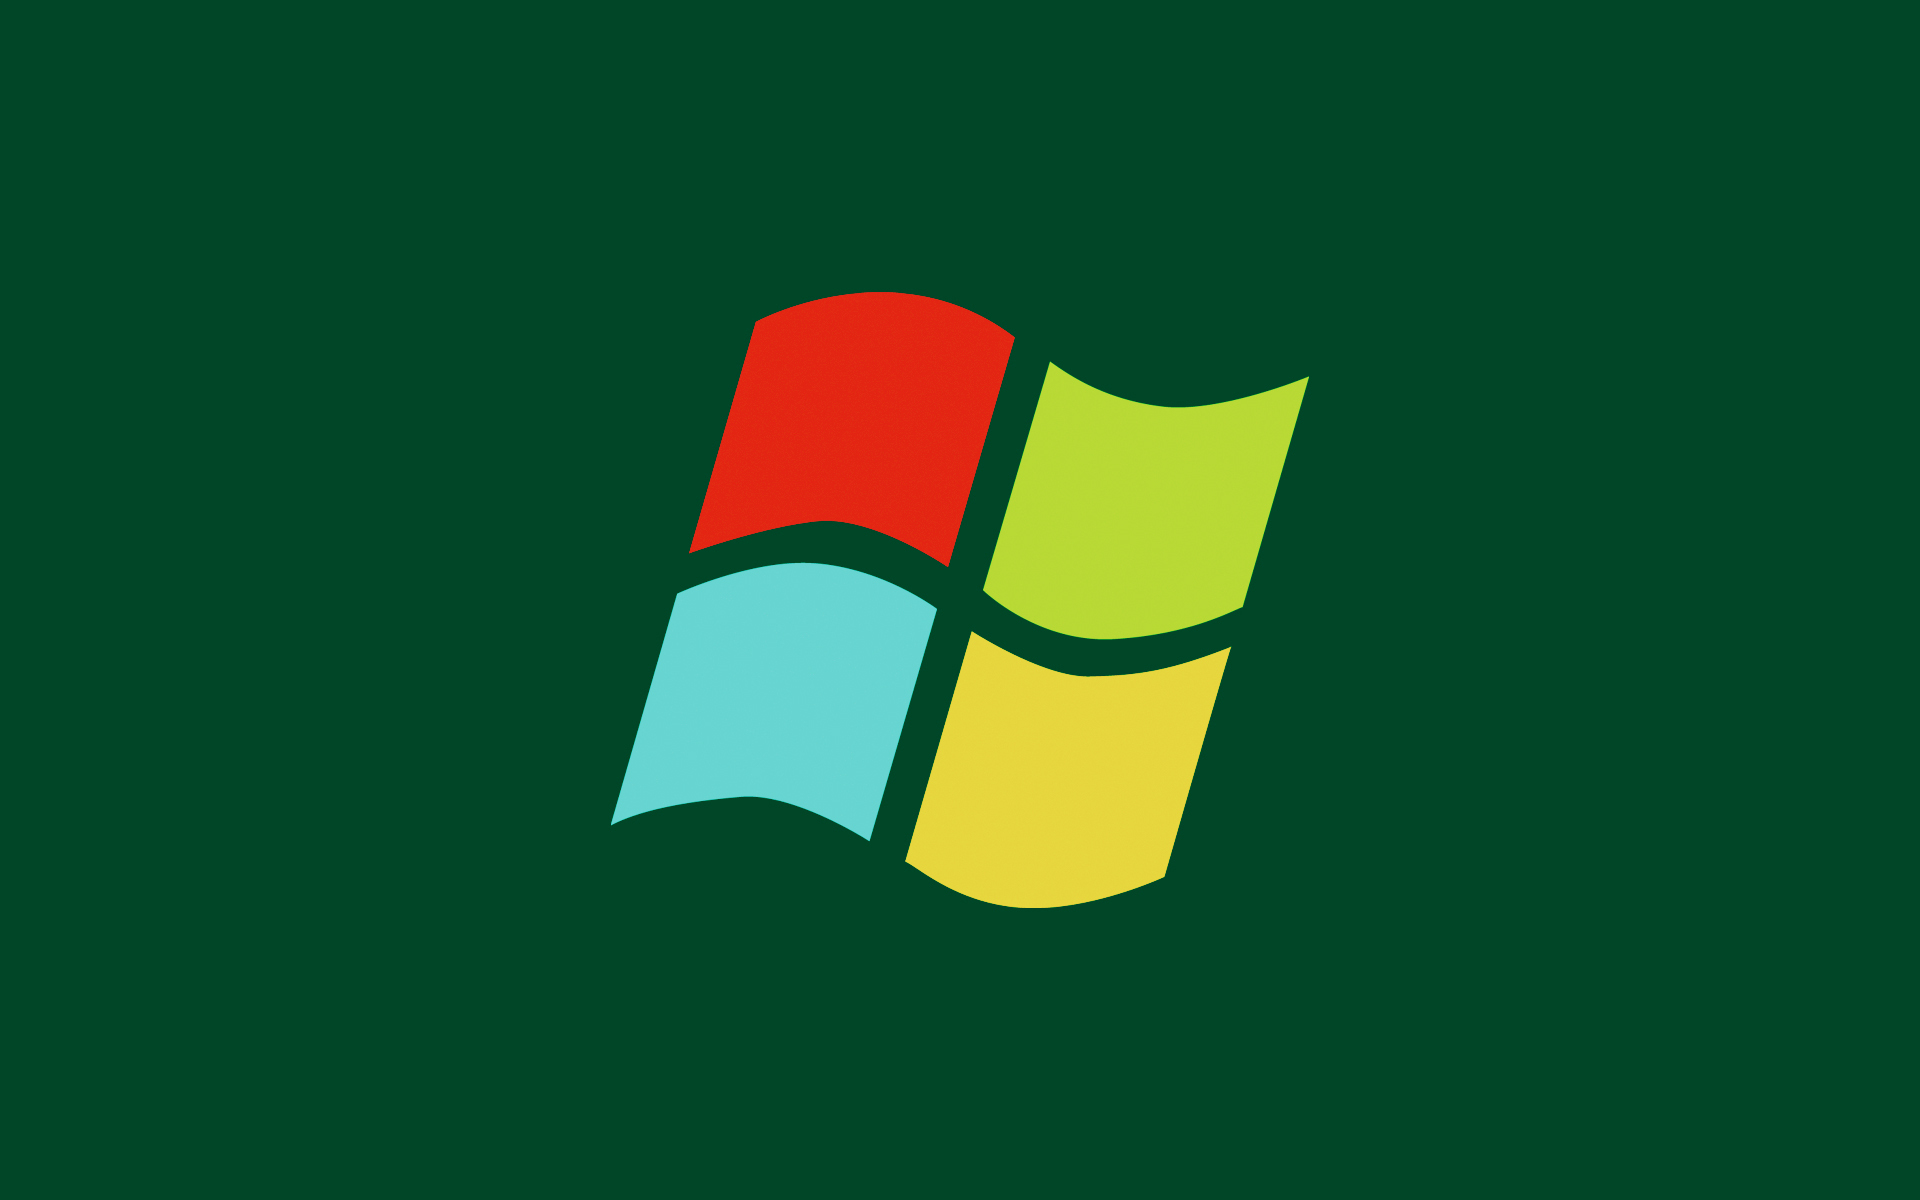 Windows Logo Desktop Pc And Mac Wallpaper